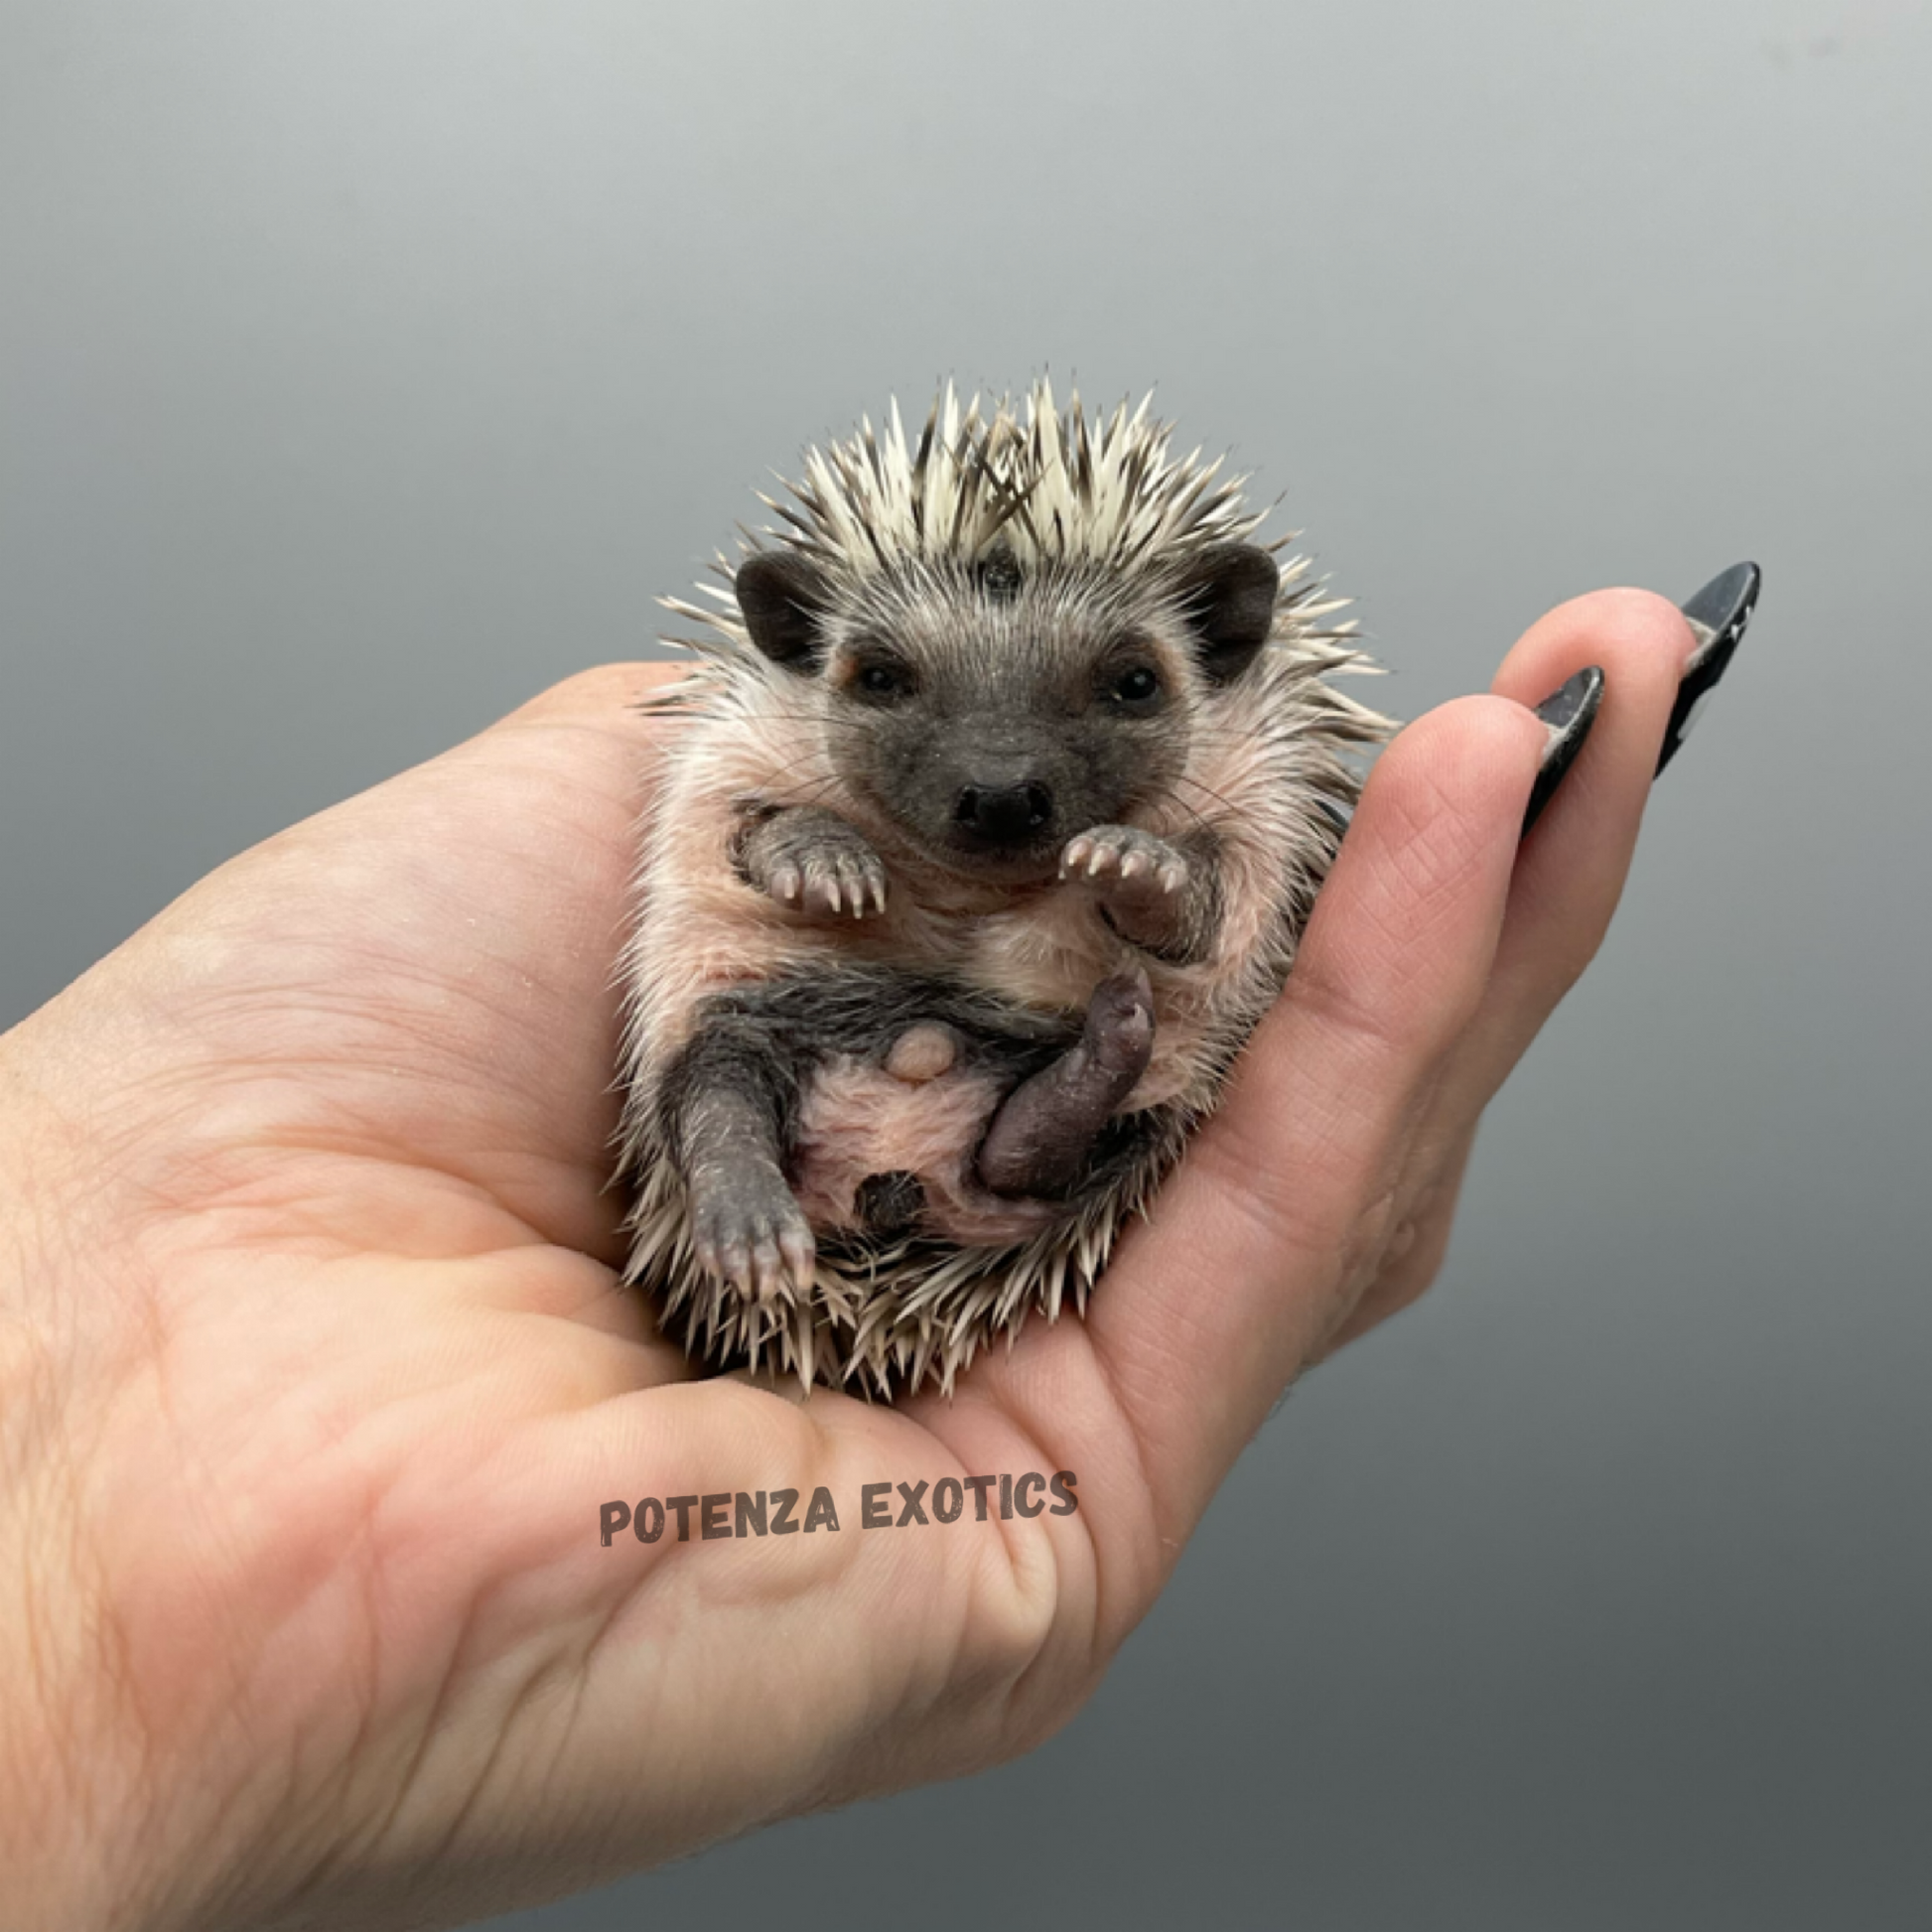 Hedgehogs for Sale in Dallas Texas